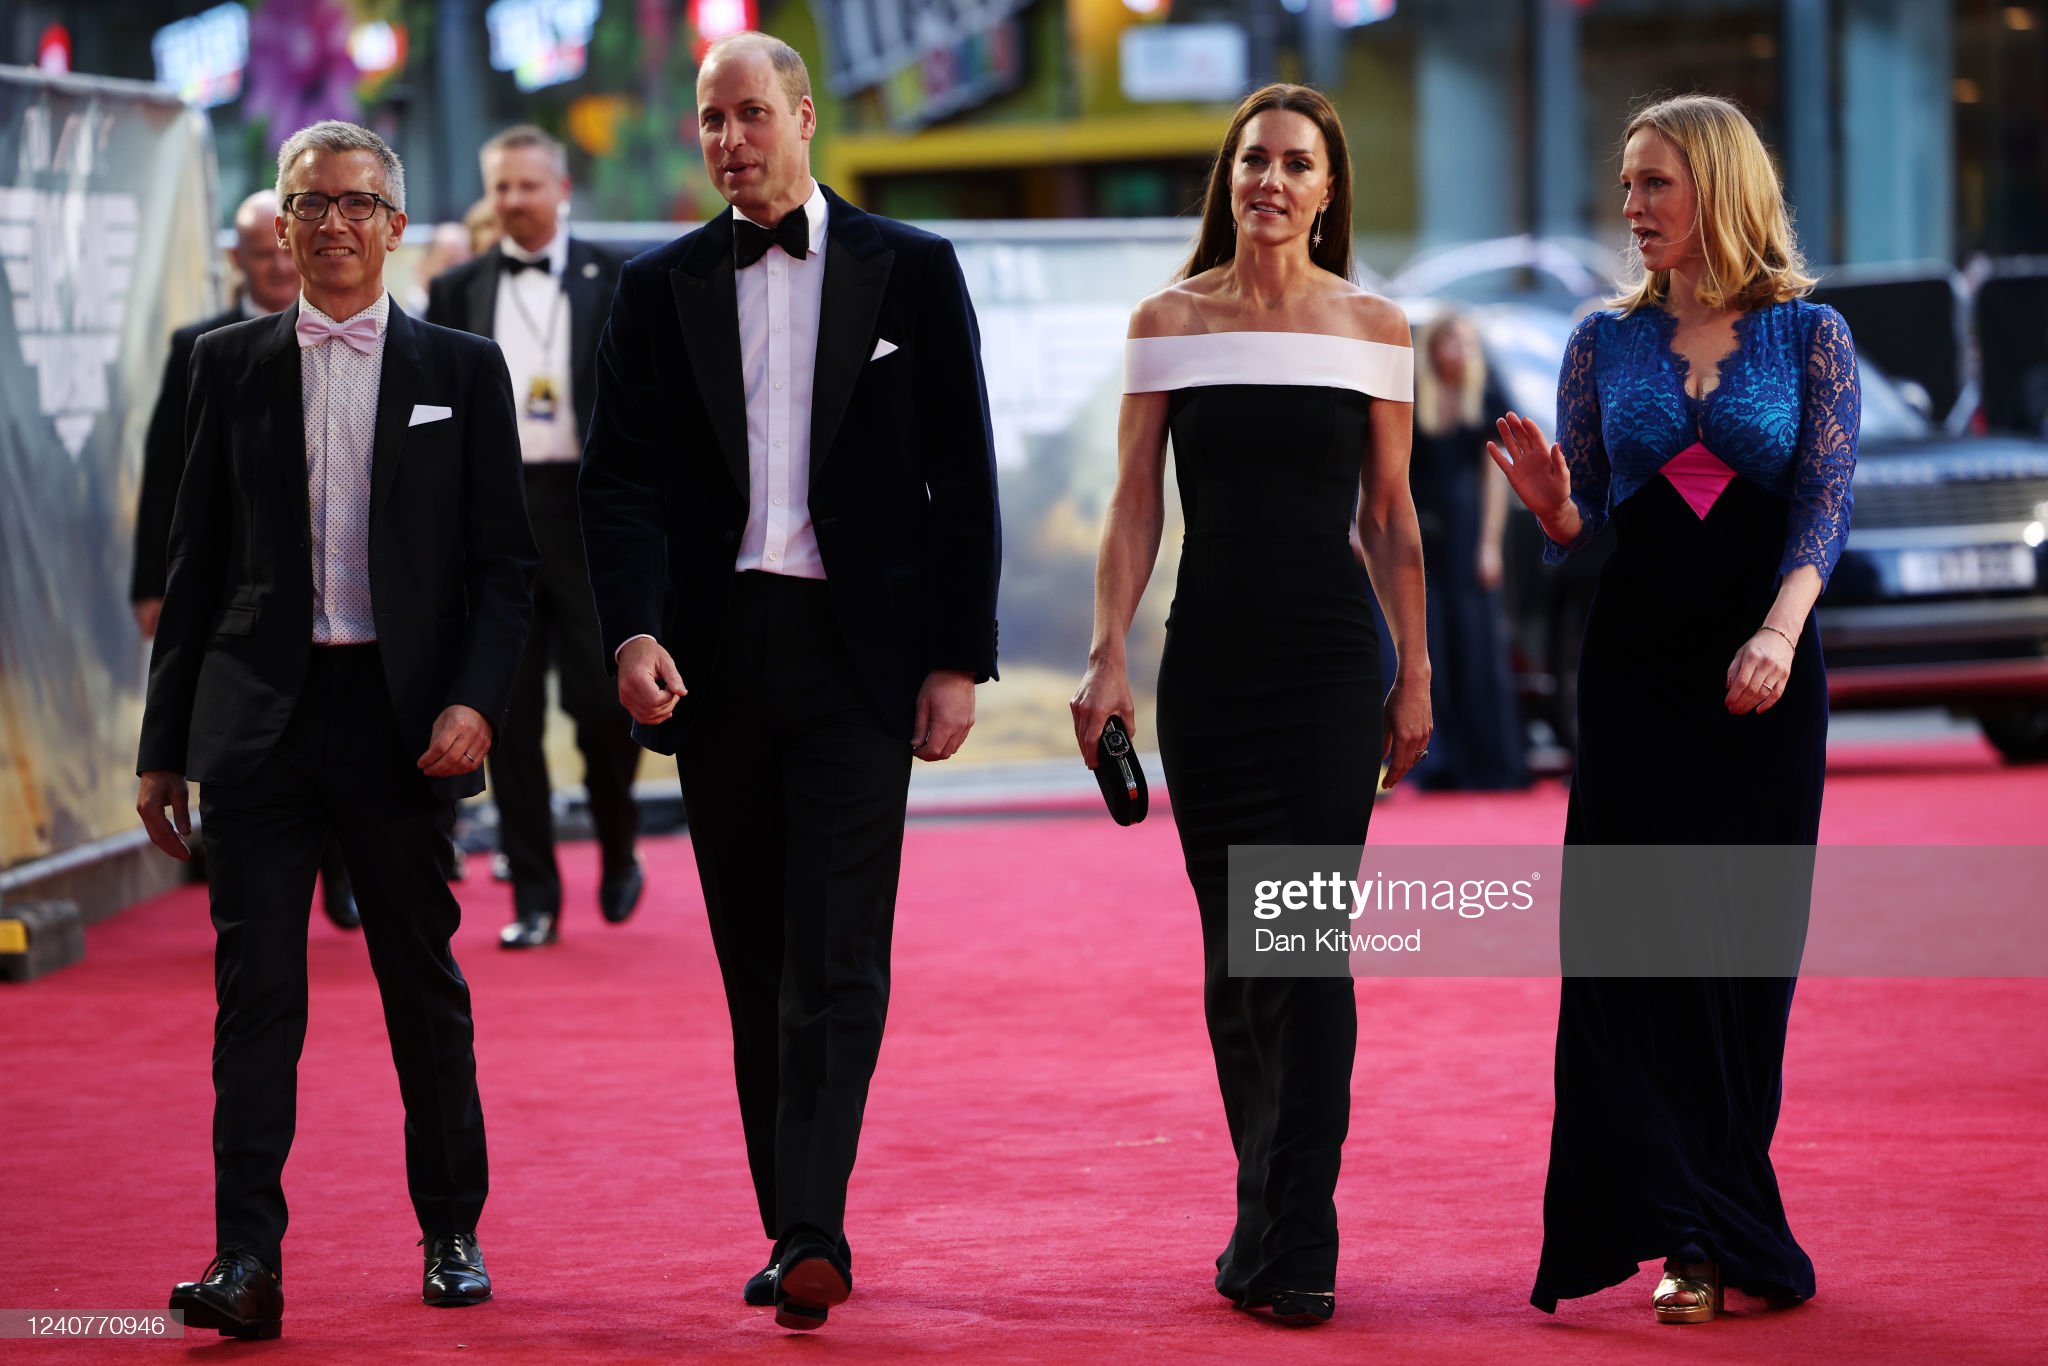 The Duke and Duchess of Cambridge Attended Top Gun: Maverick Premiere